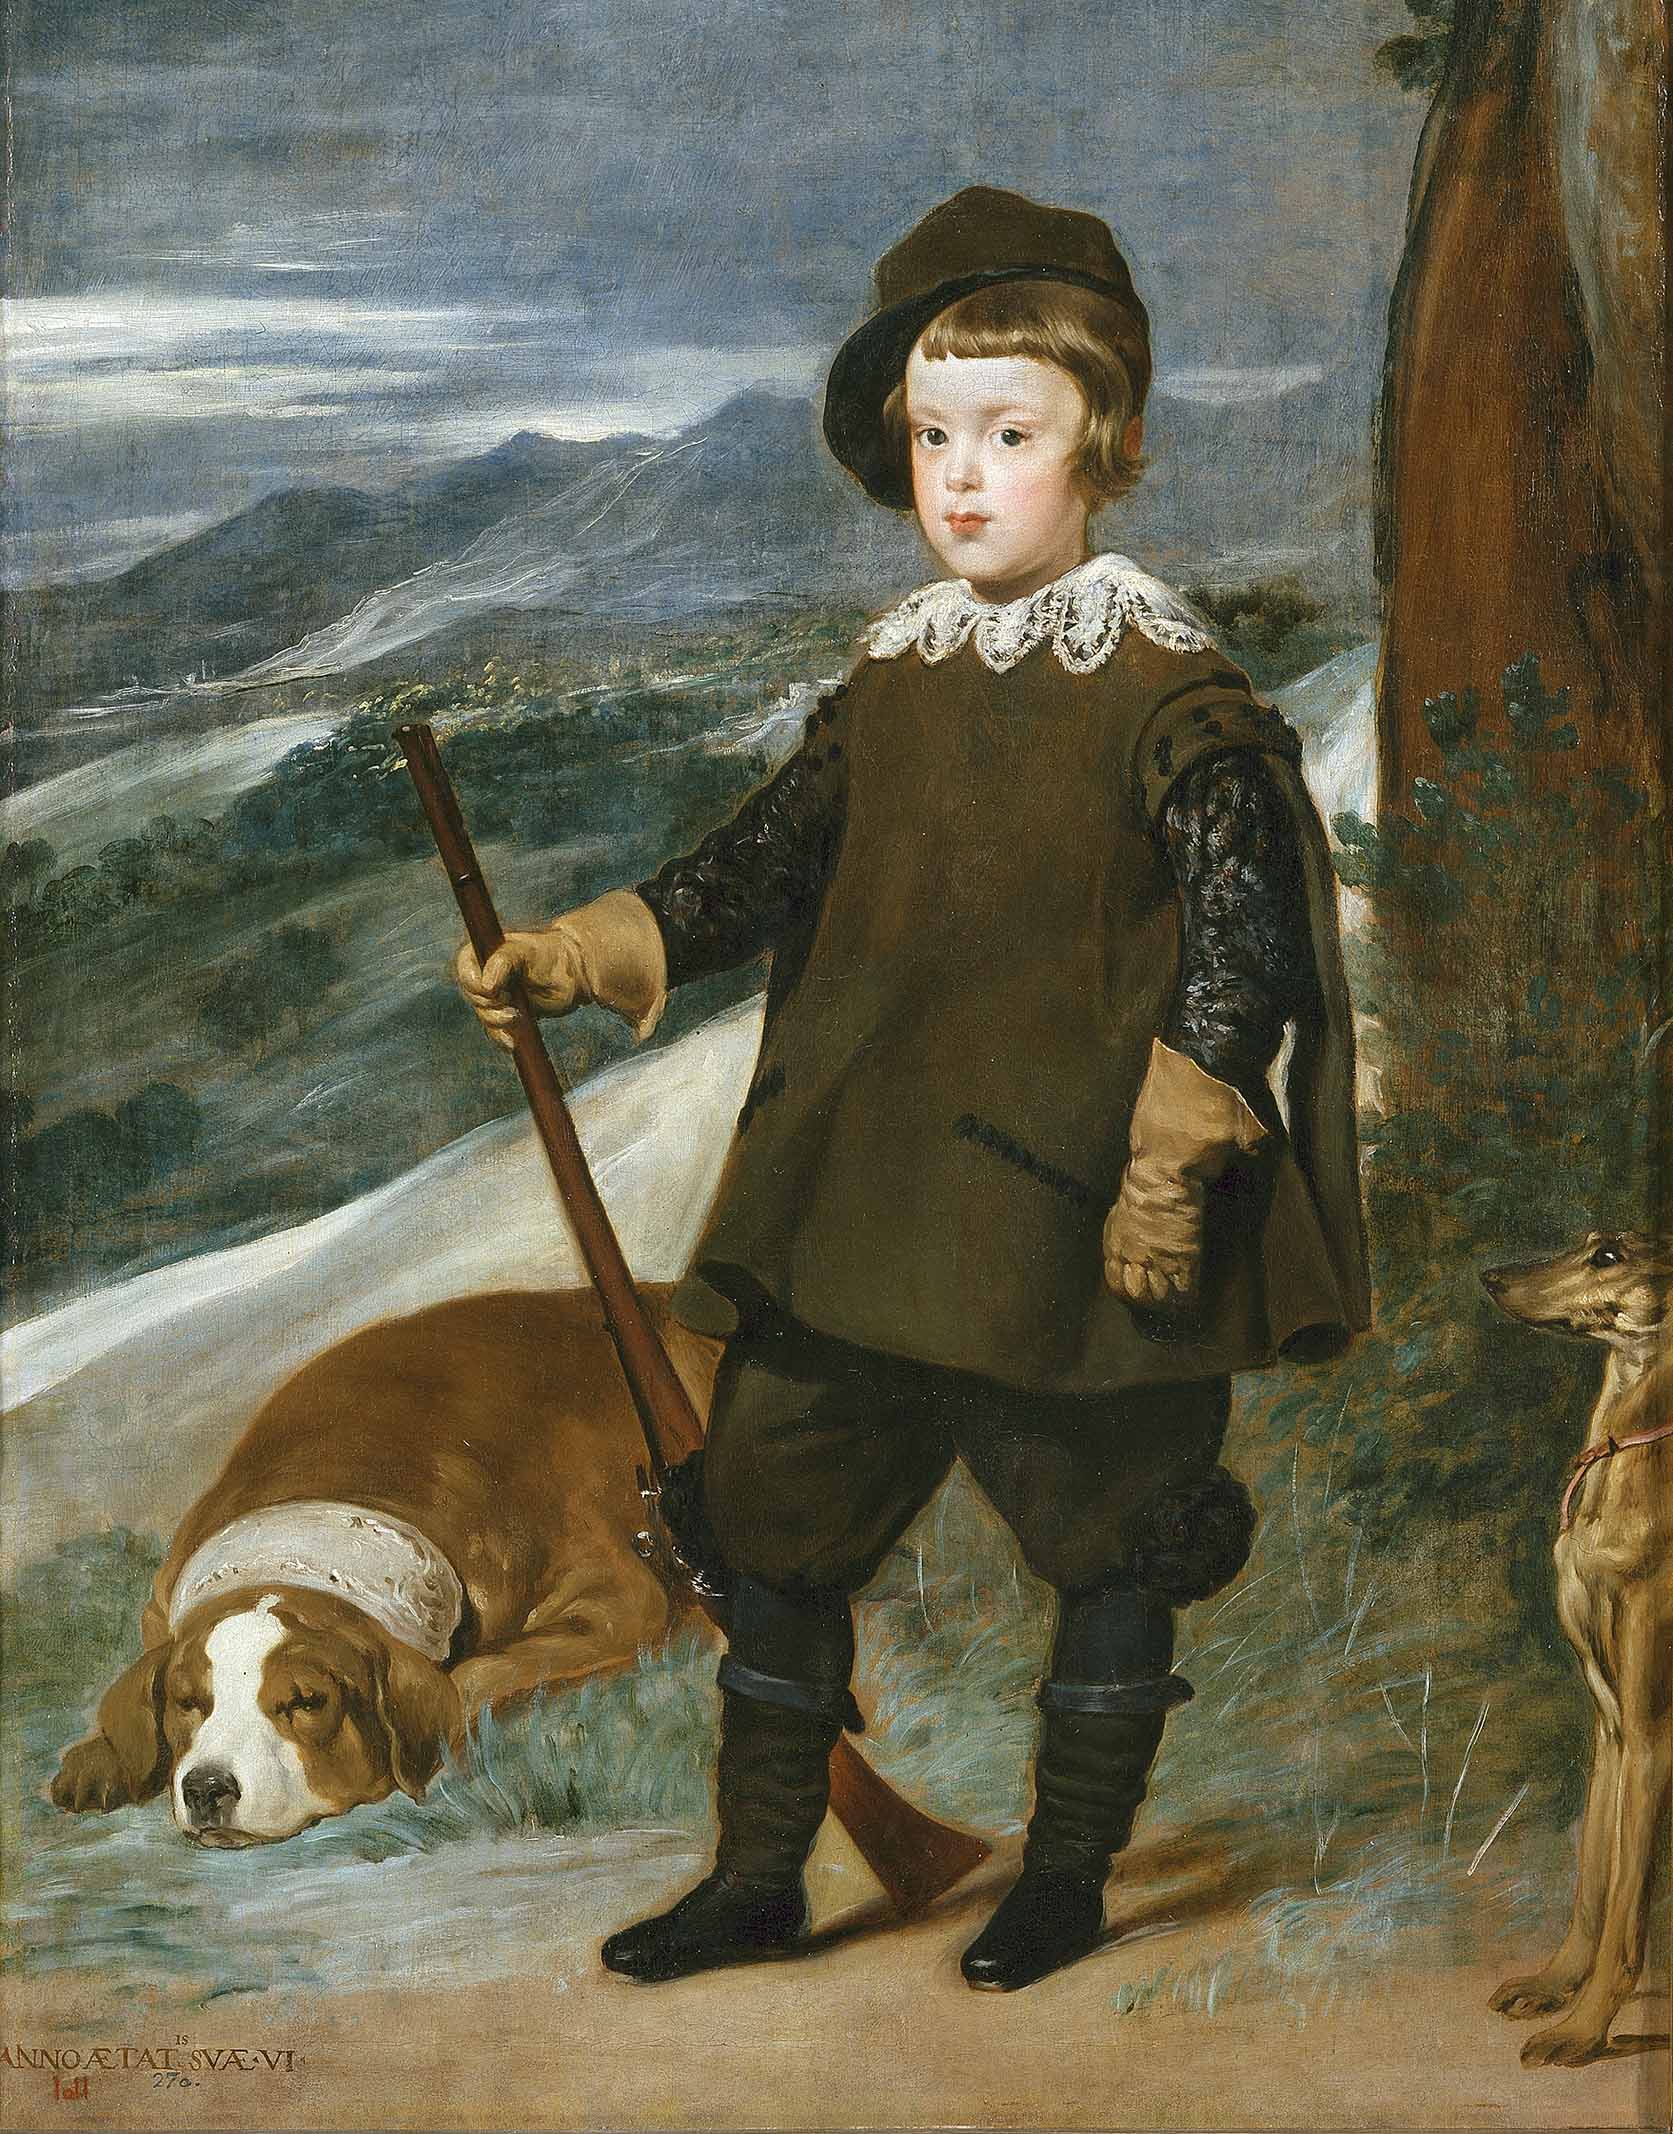 Prince Balthasar Charles as a Hunter